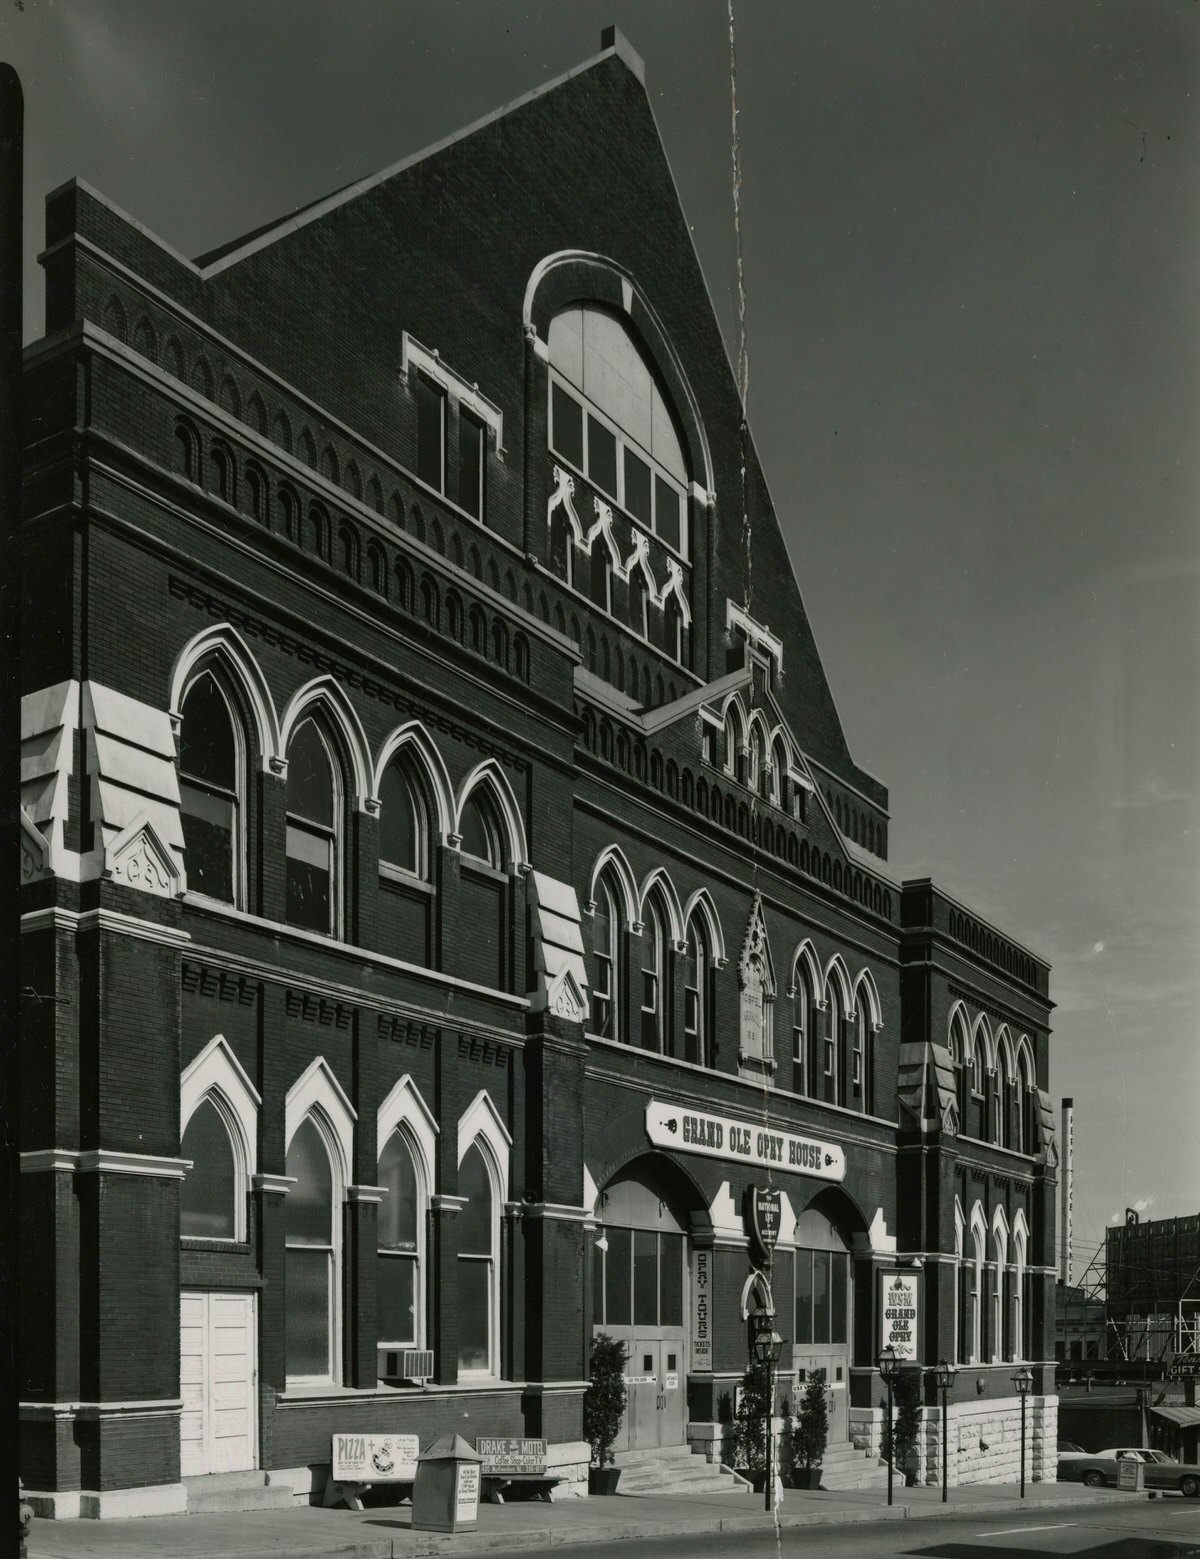 Exterior of the Ryman Auditorium showing advertisements, 1970